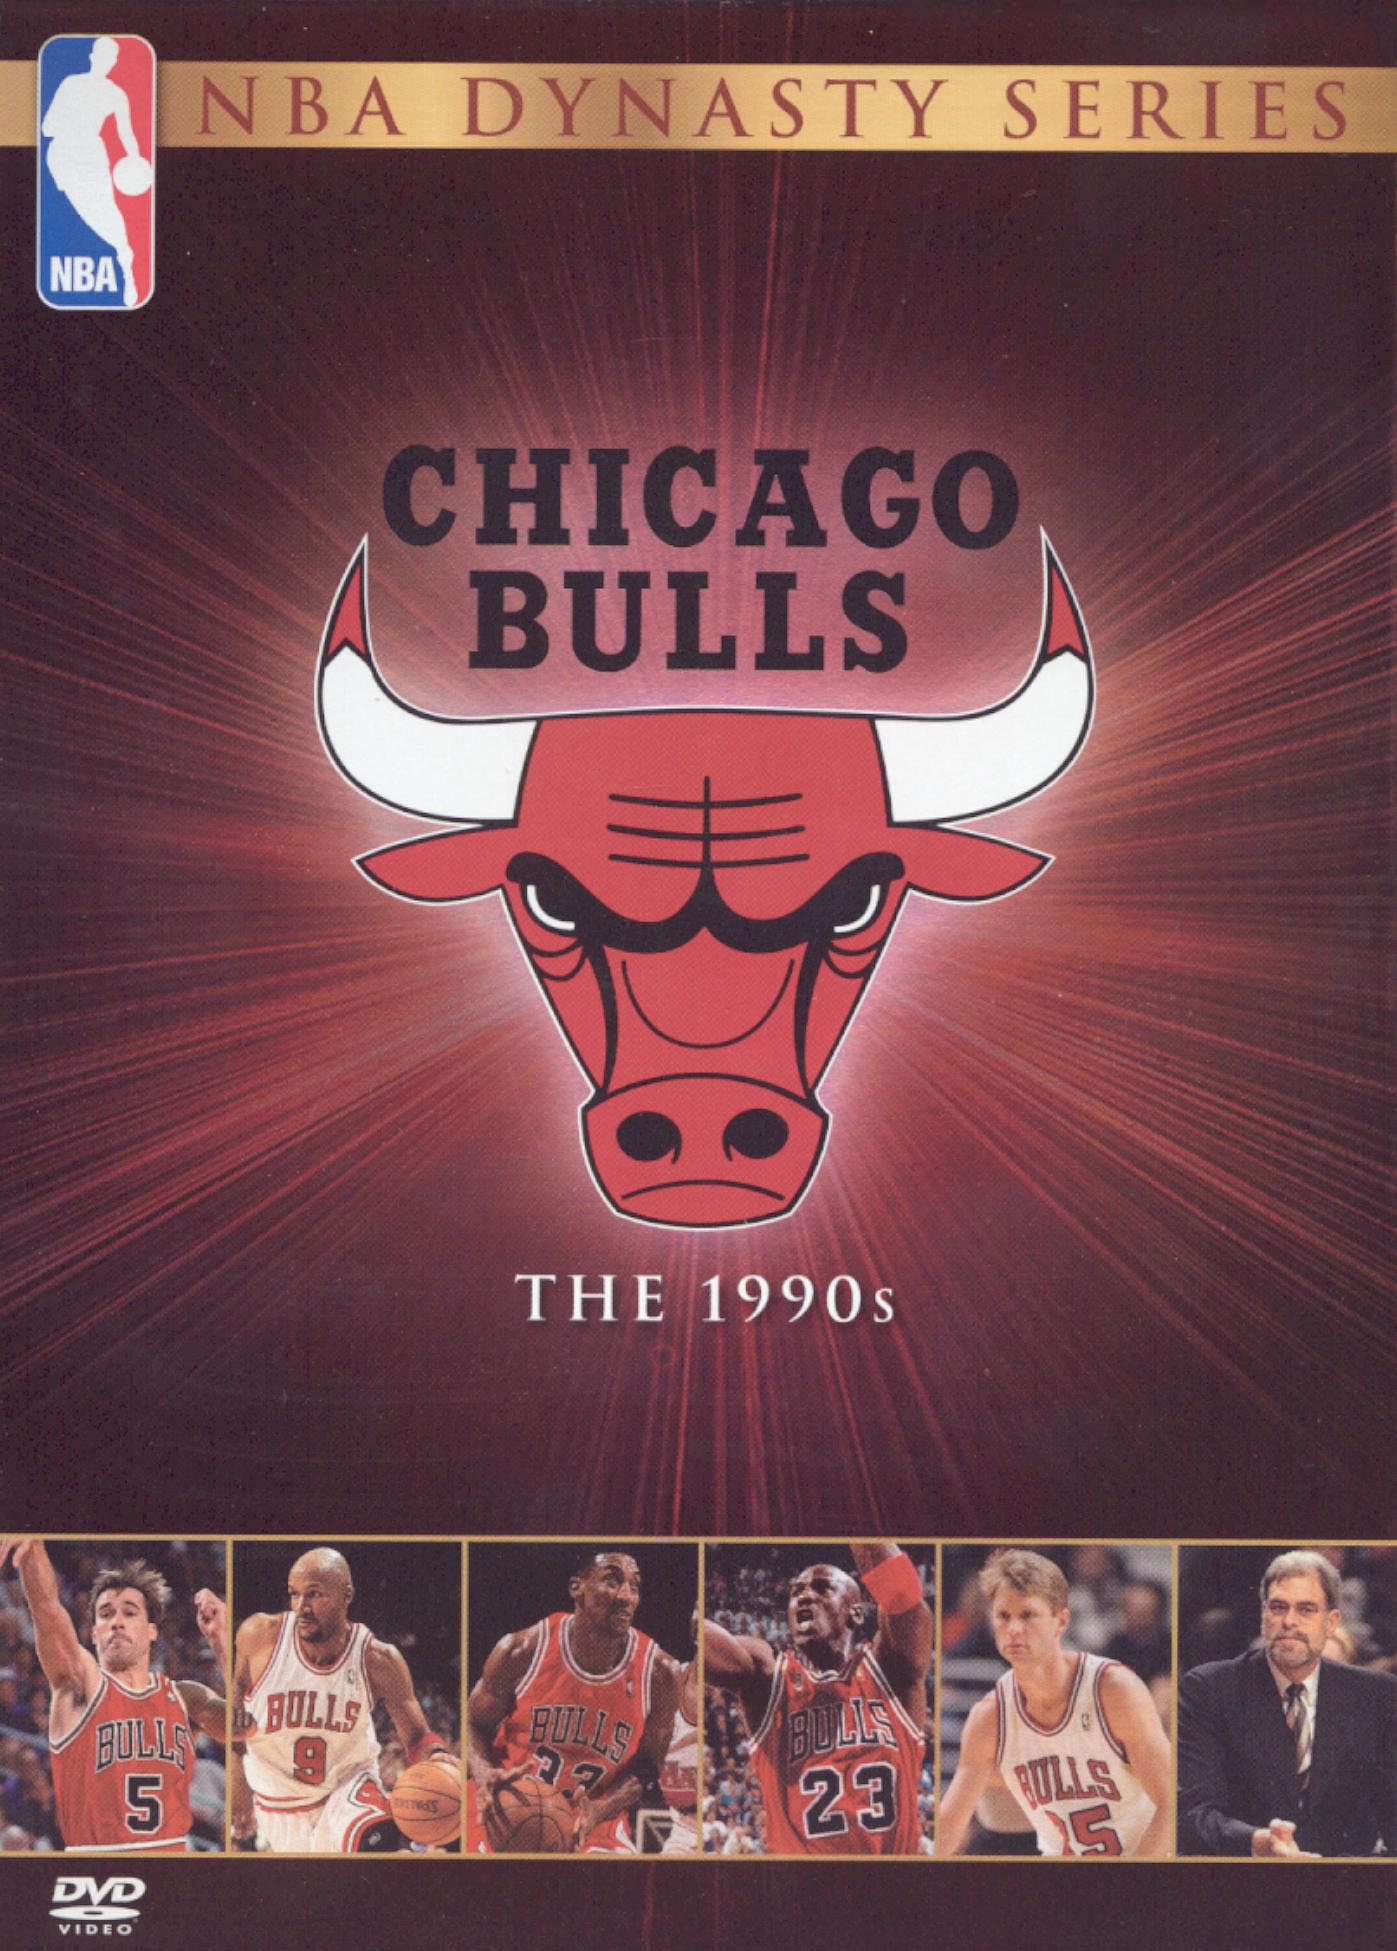 nba dynasty series chicago bulls the 1990s